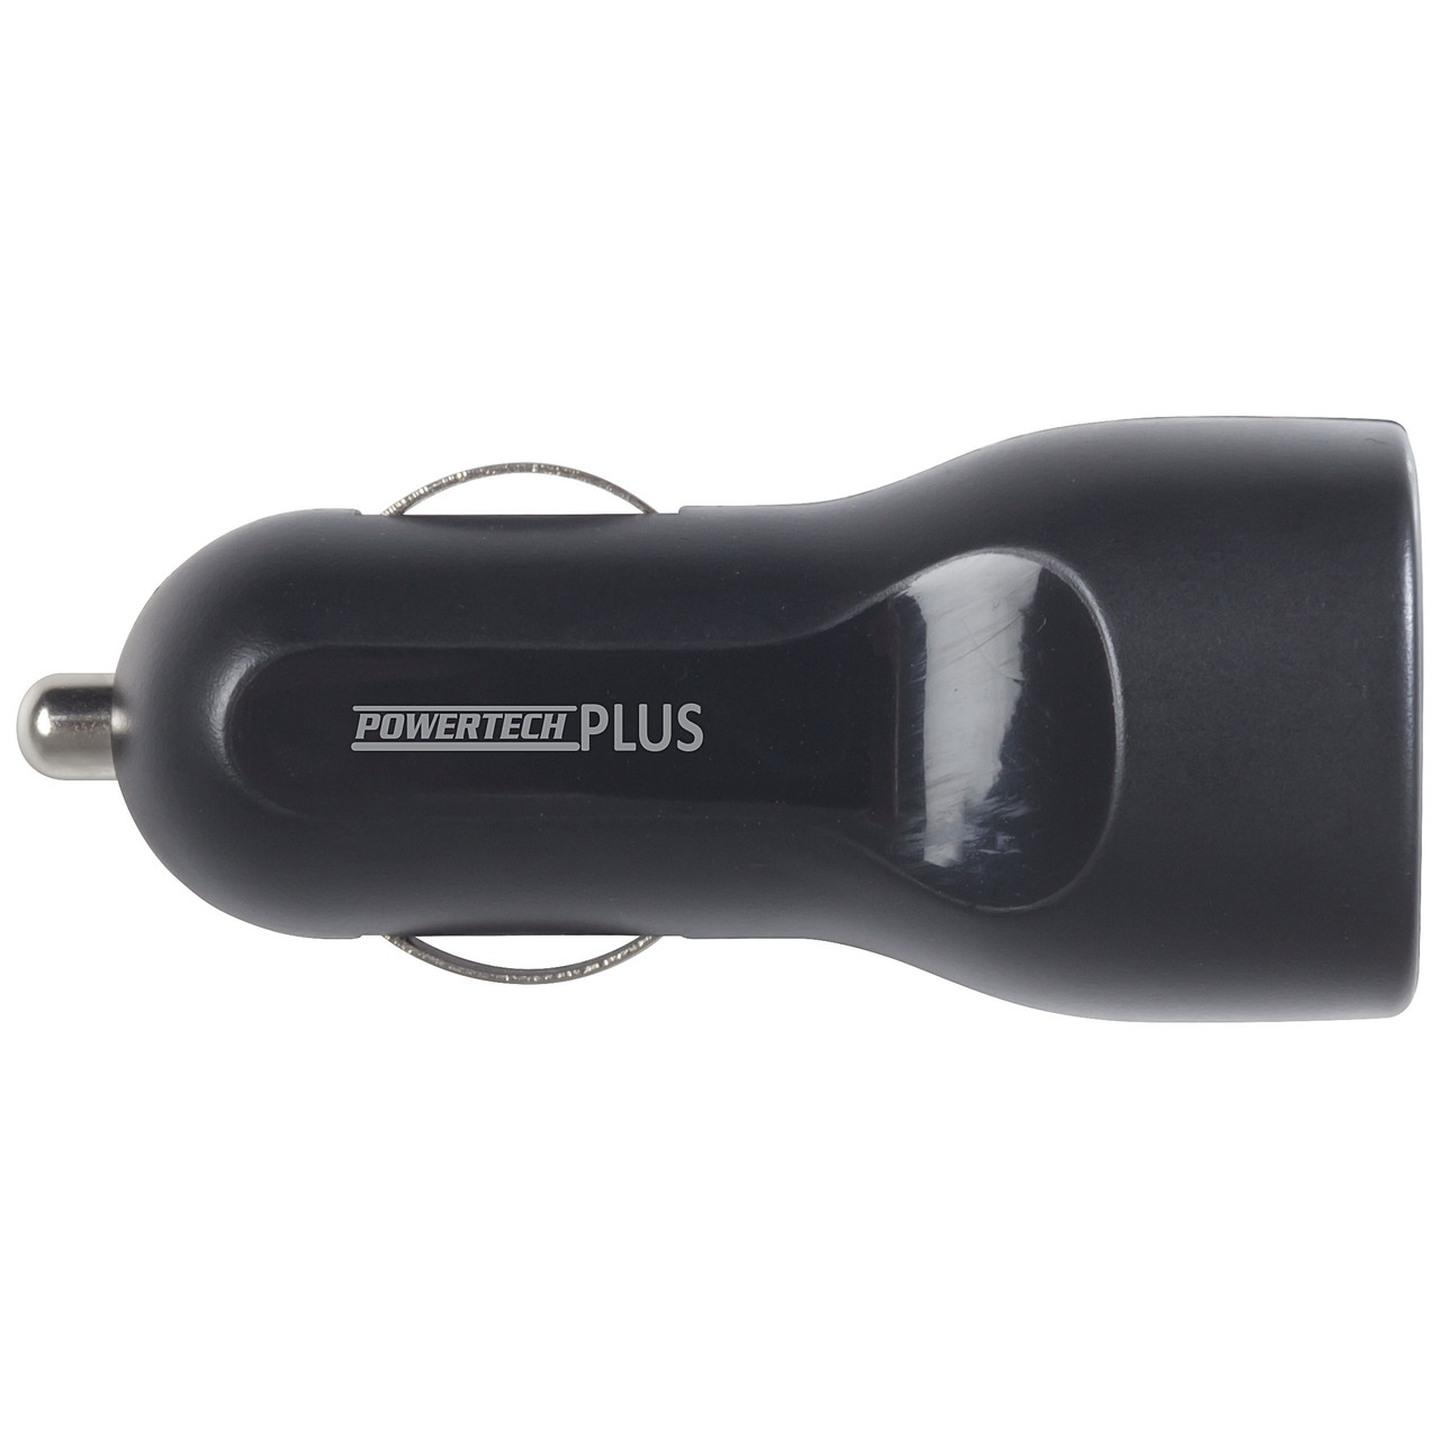 2.4A Dual USB Car Cigarette Lighter Adaptor